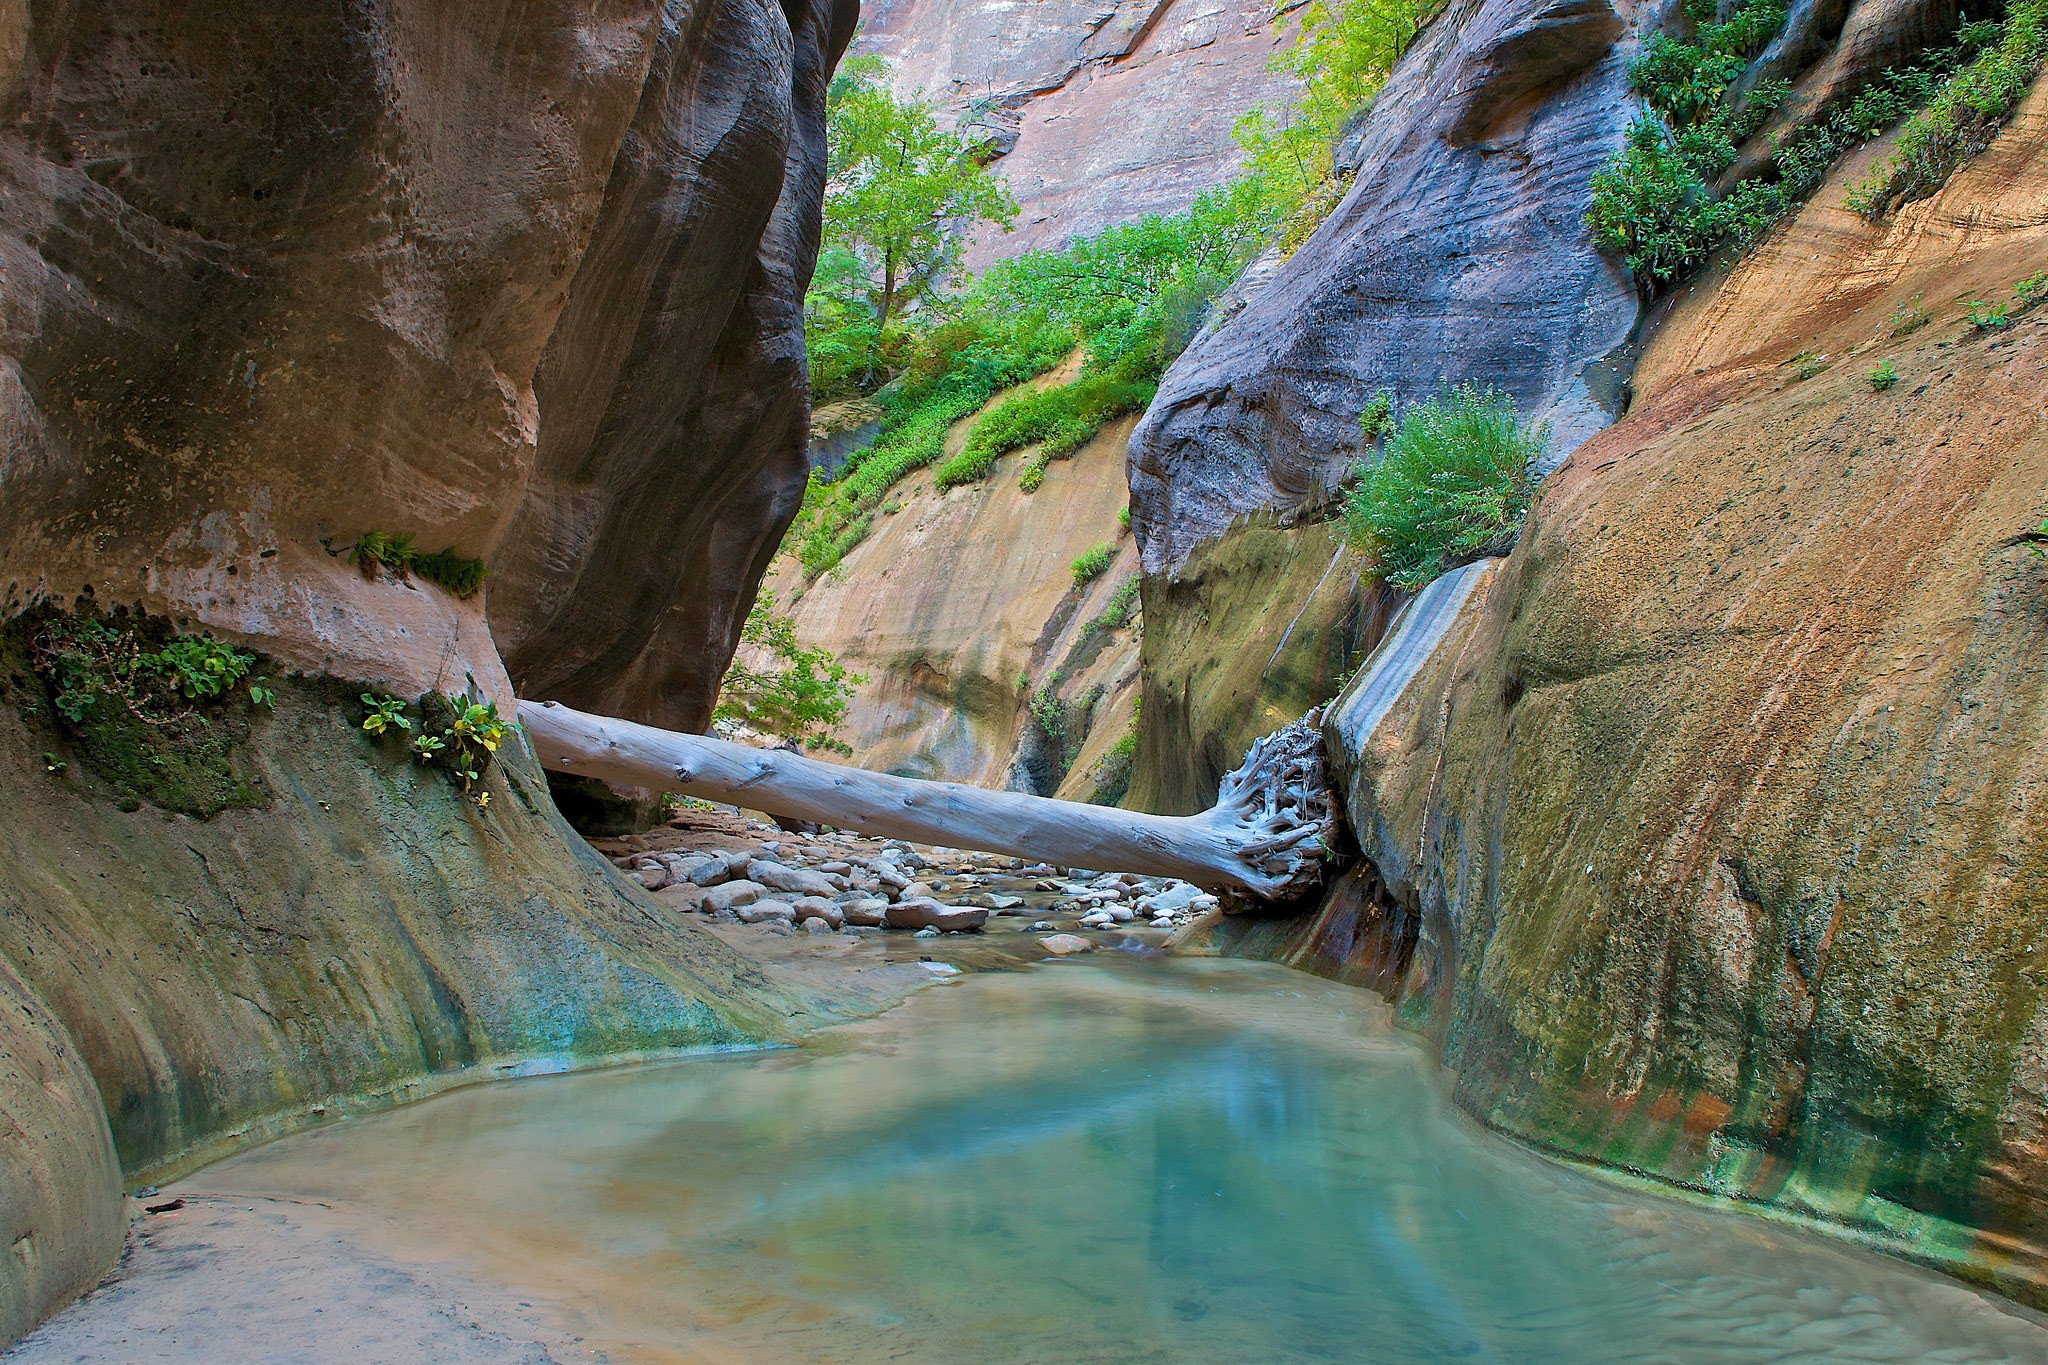 General 2048x1365 nature Zion National Park Utah USA rocks creeks outdoors